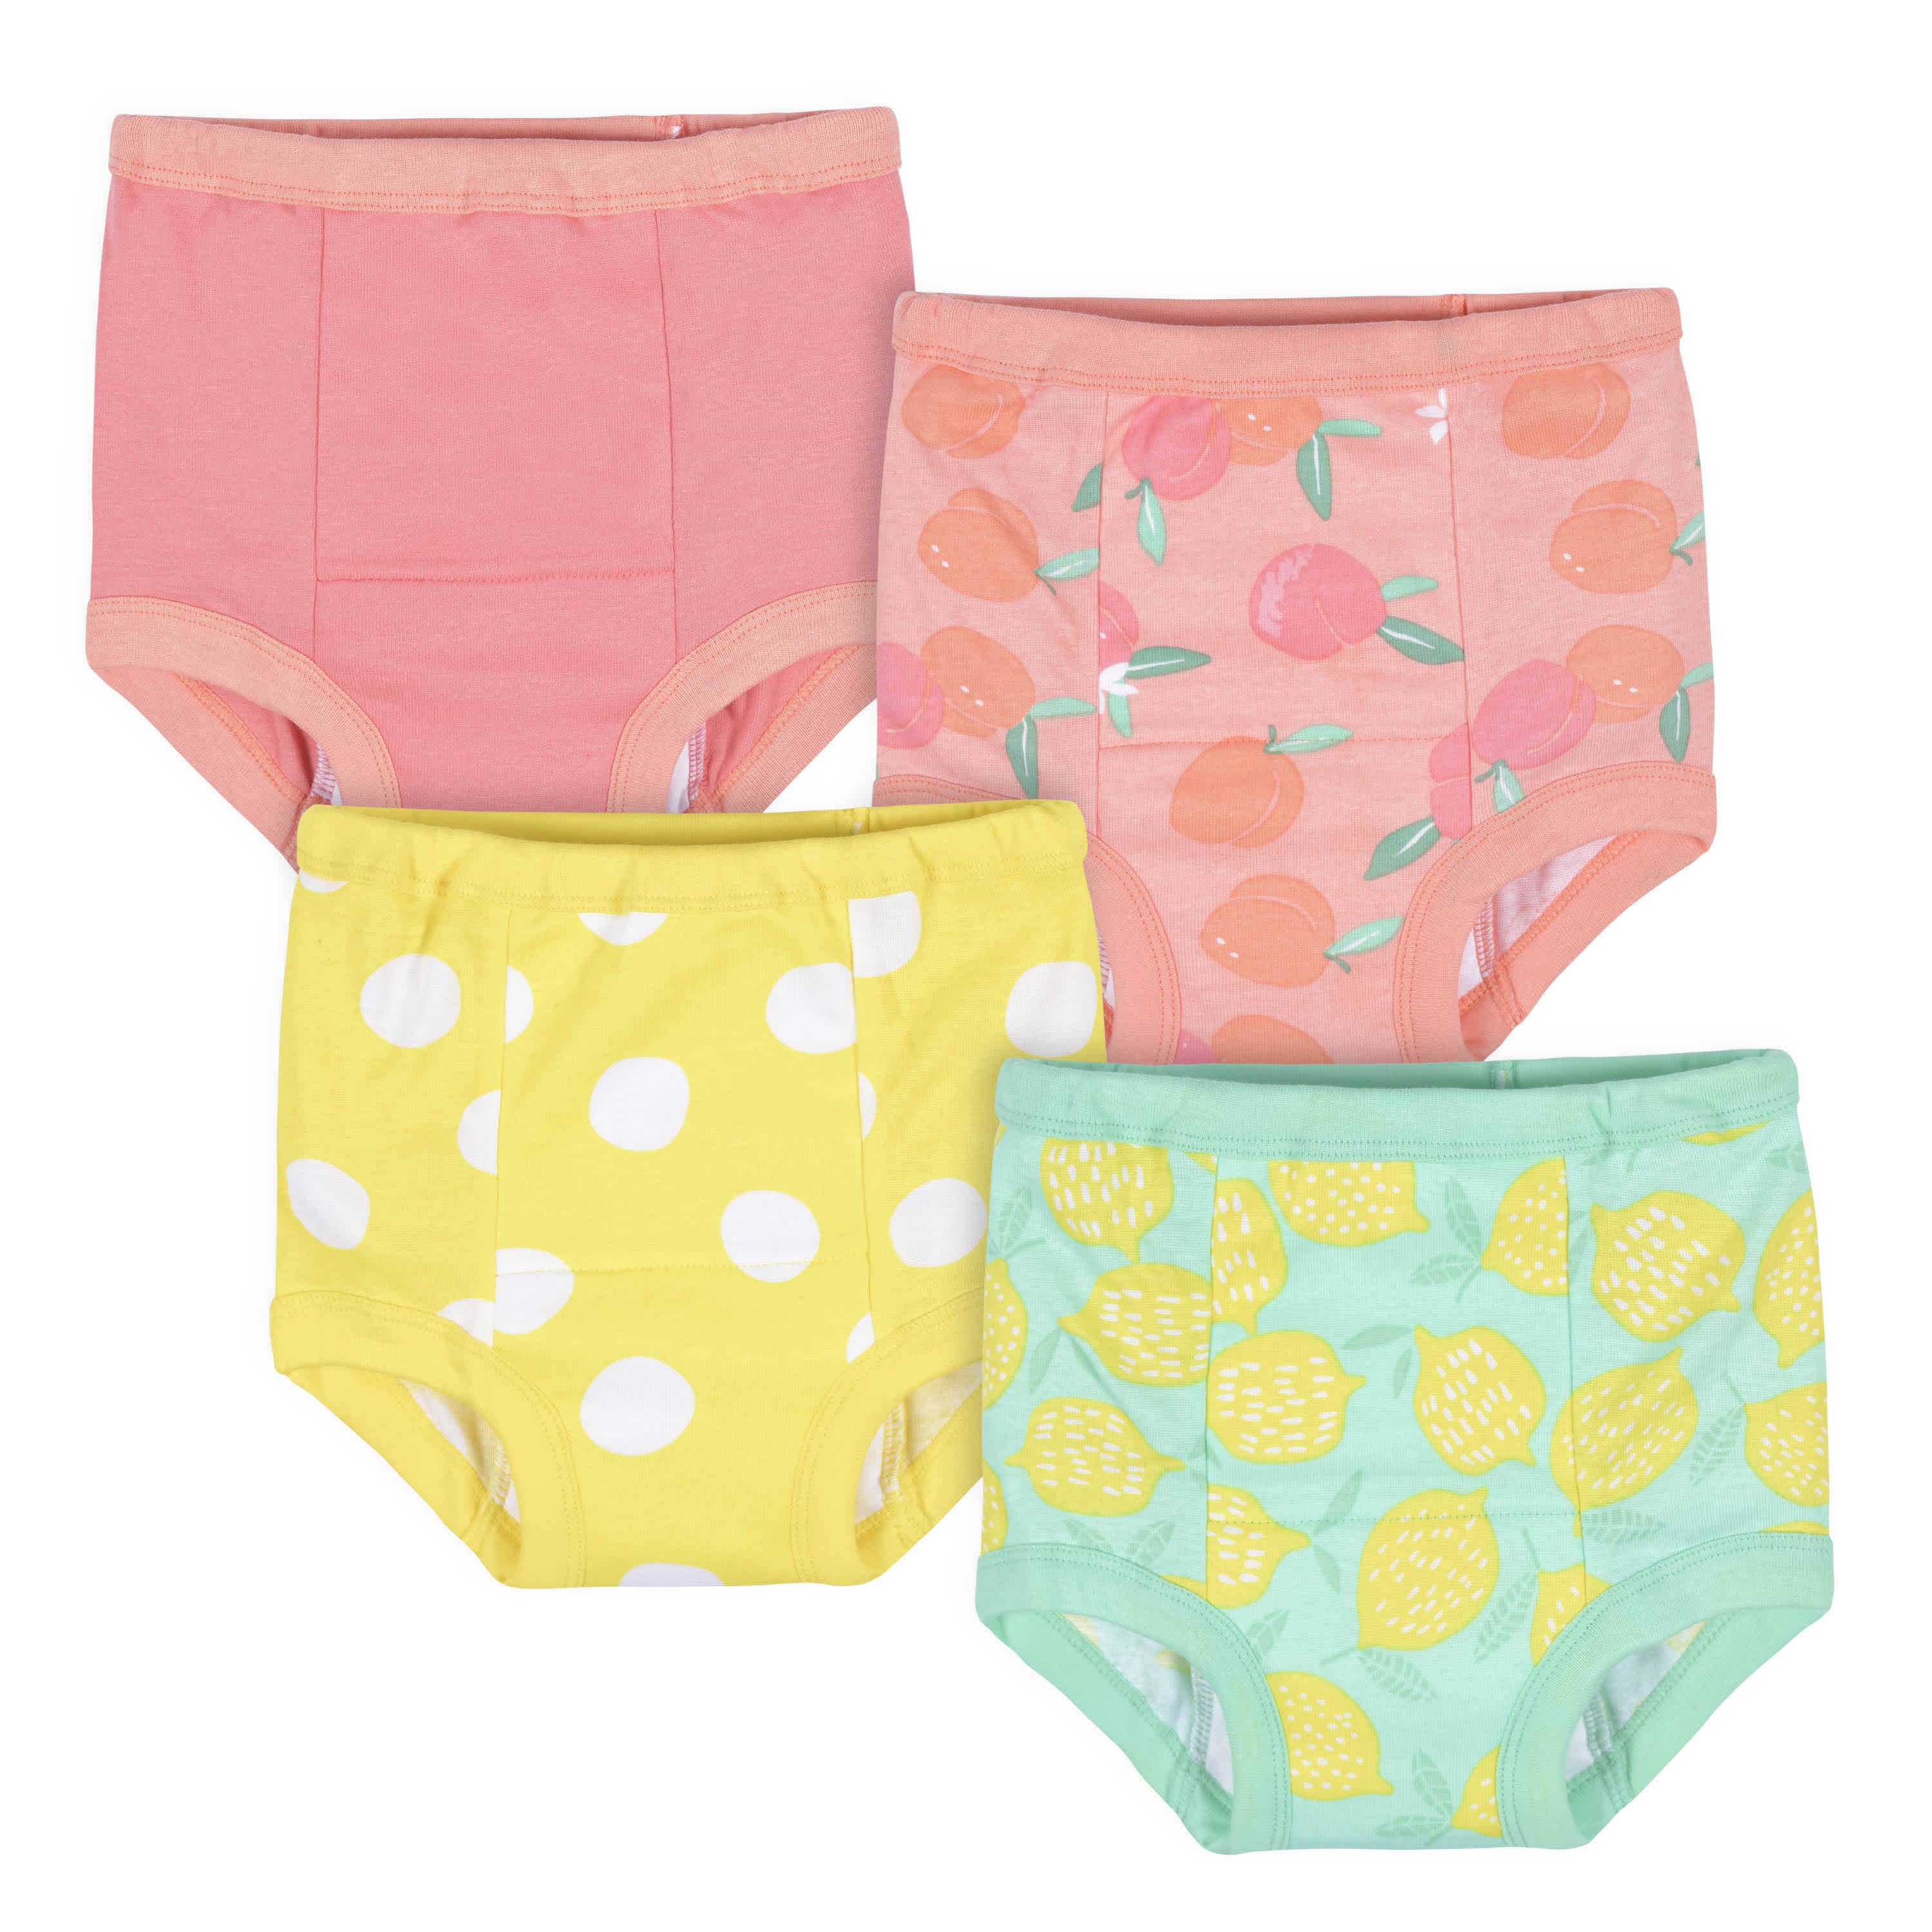 Baby Kids Waterproof Reusable Cotton Infant Potty Training Pants Nappy  Children | eBay